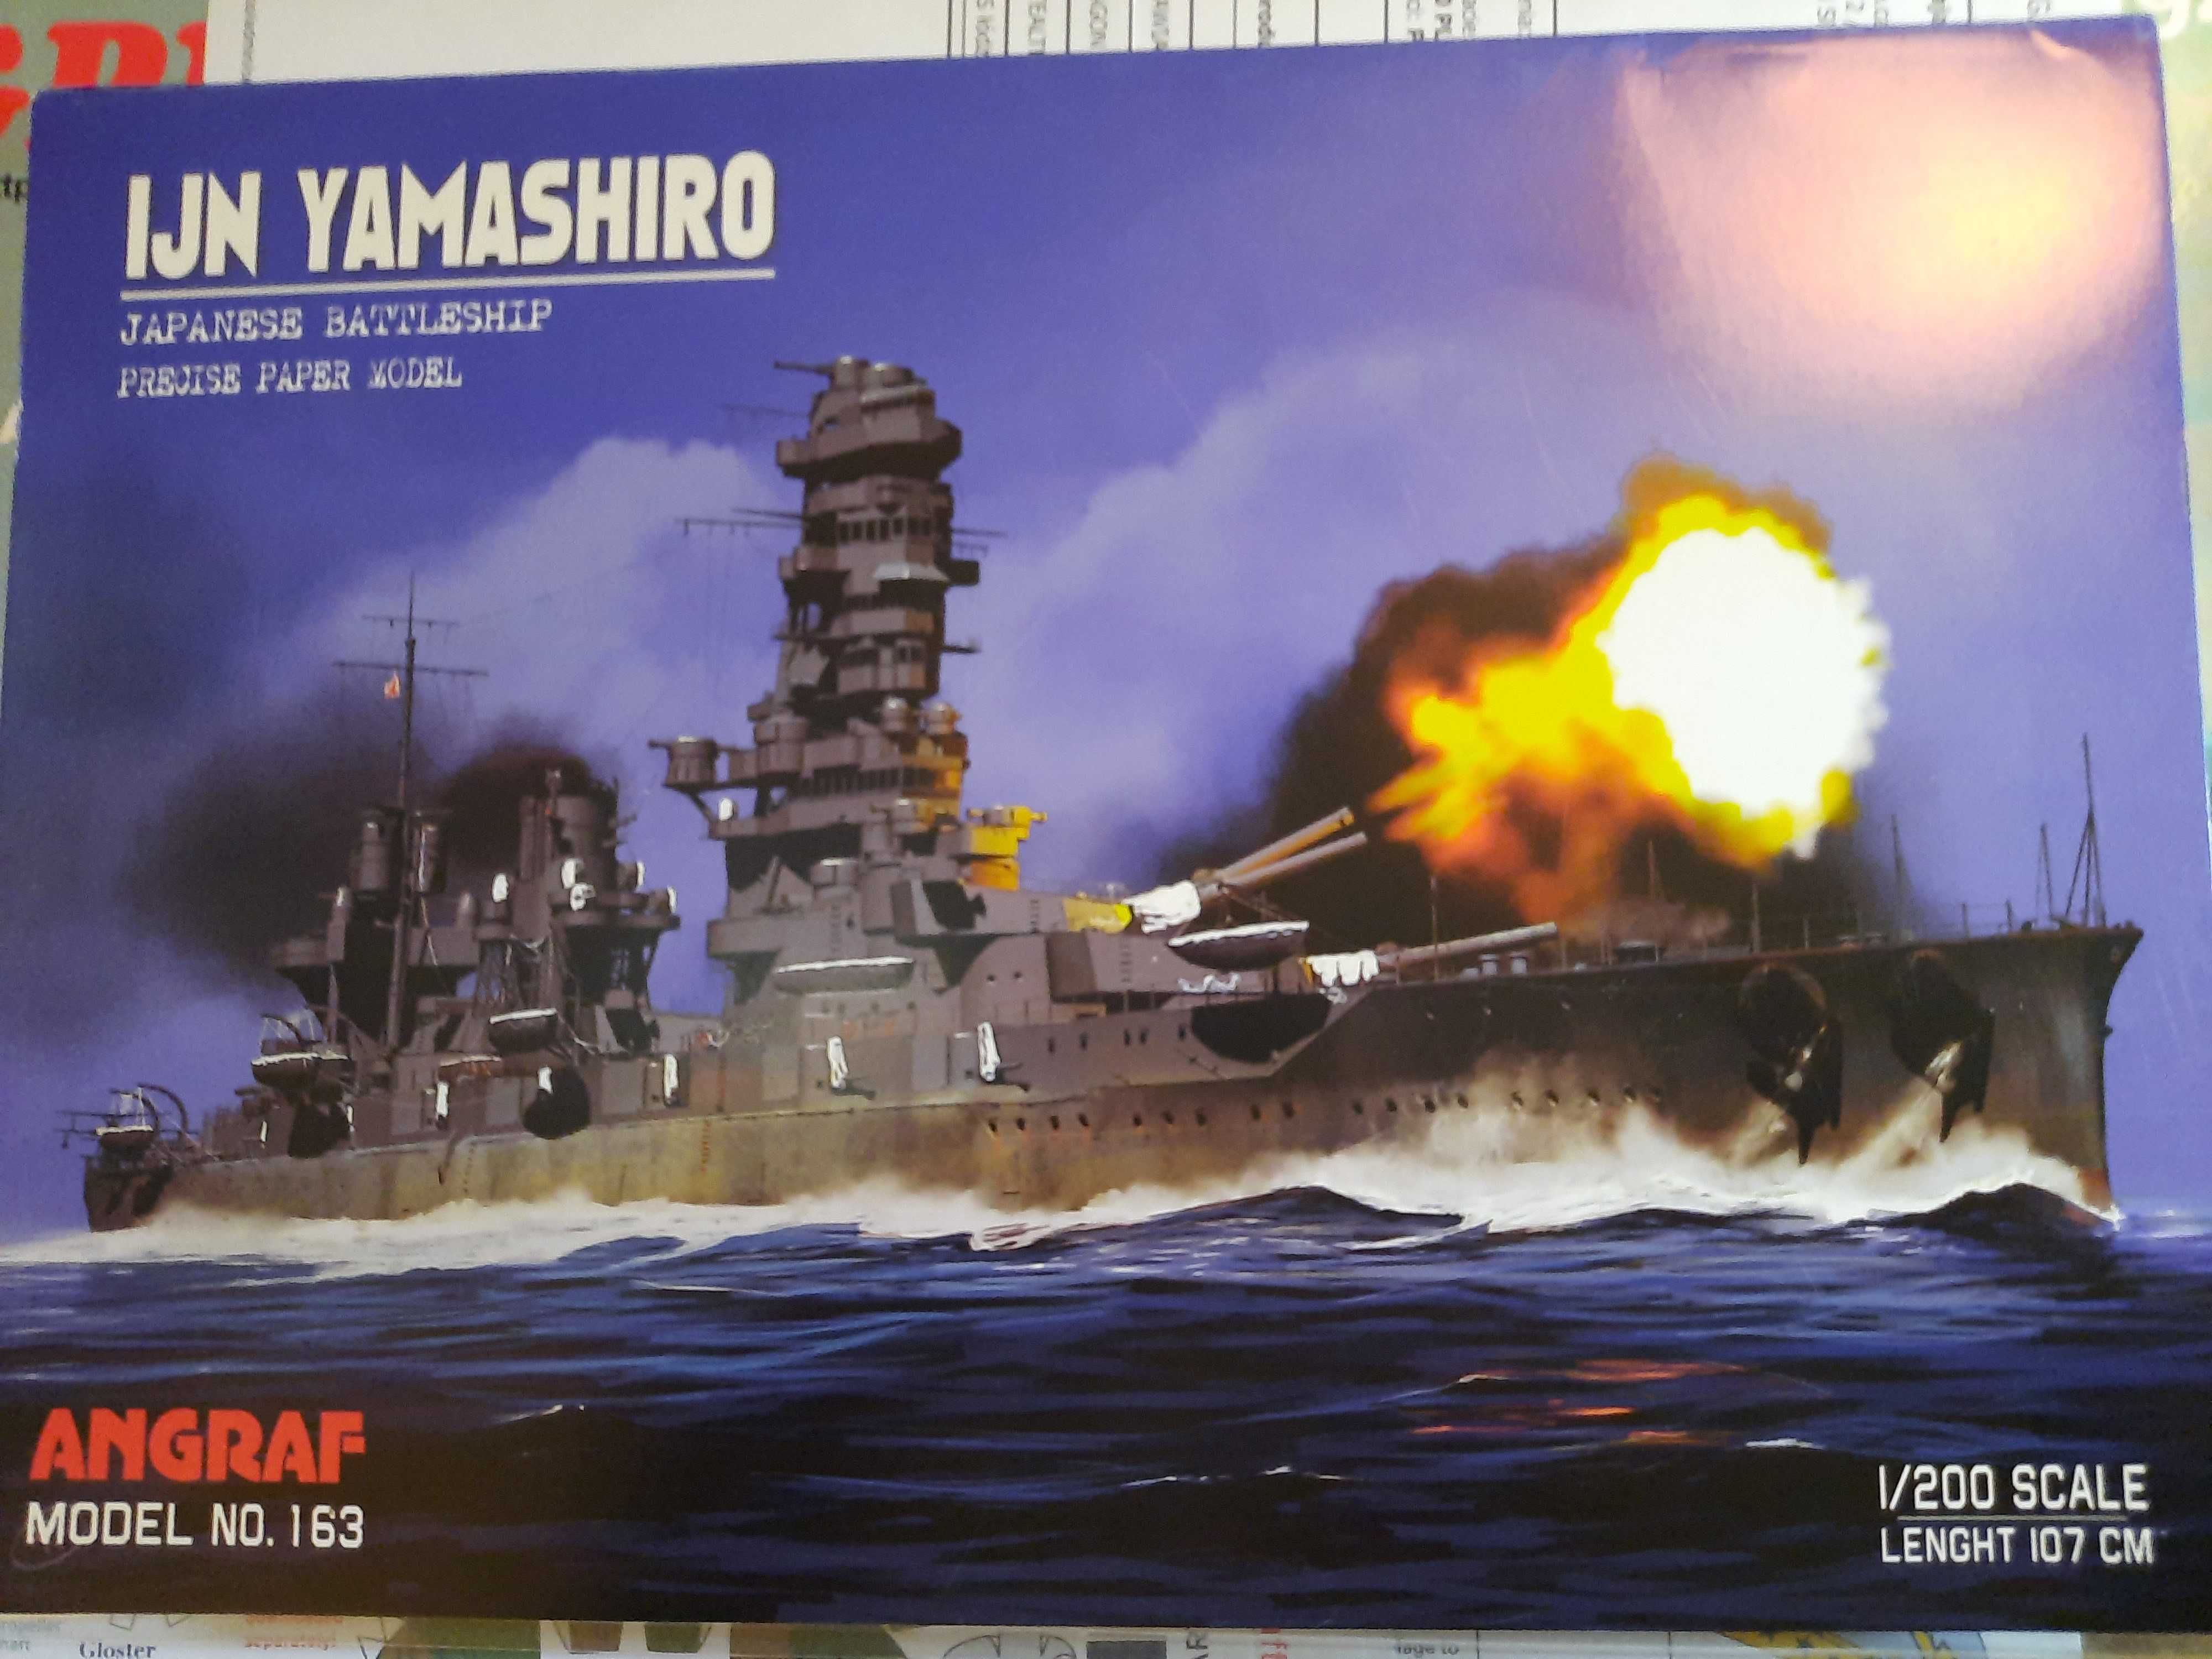 Model kartonowy Angraf pancernik IJN Yamashiro offset - obniżka 55zł